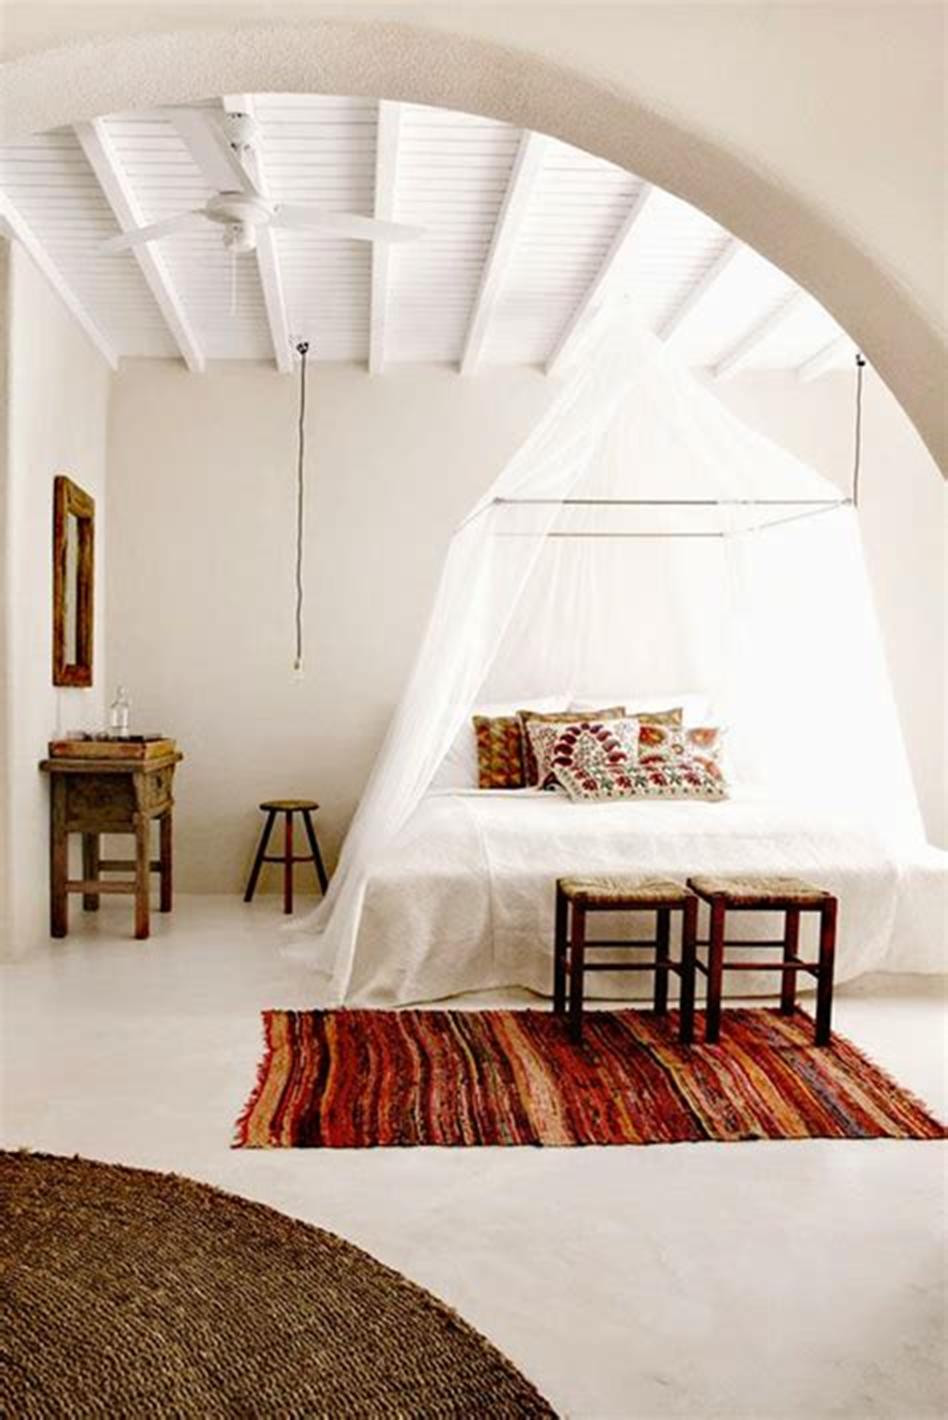 Minimalist Bedroom Decor
 40 Cozy Minimalist Bedroom Decorating Ideas in 2019